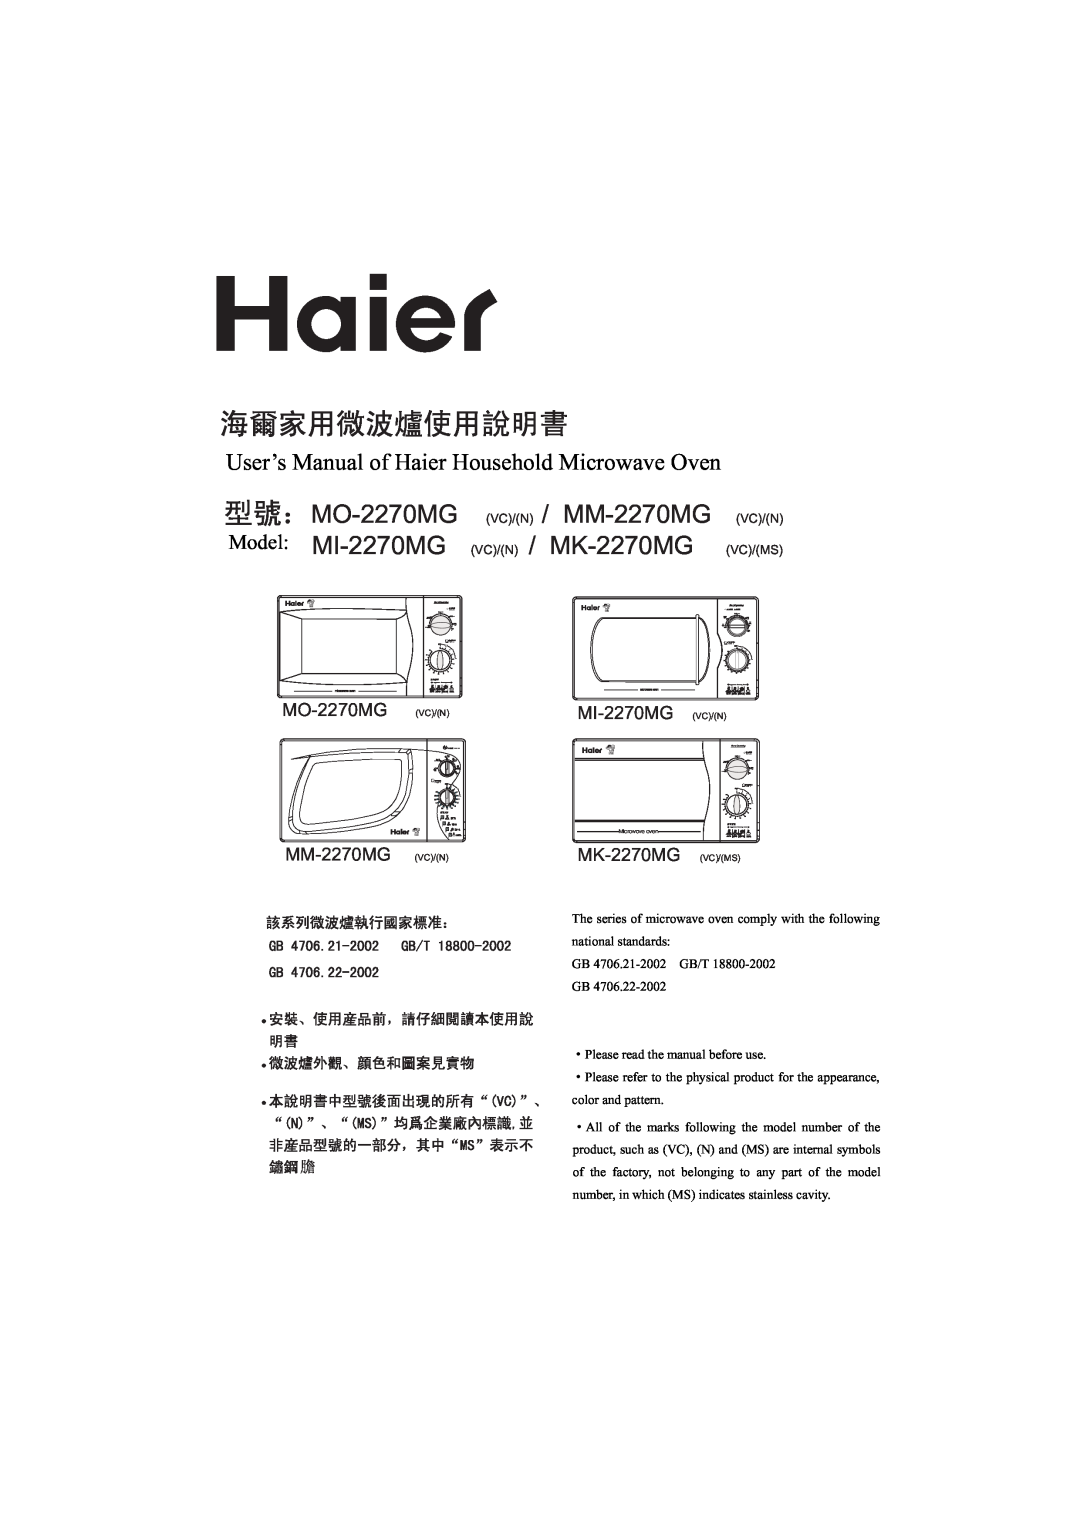 Haier MO-2270MG user manual VC/N / MM-2270MG, Model: MI-2270MG, VC/N / MK-2270MG 